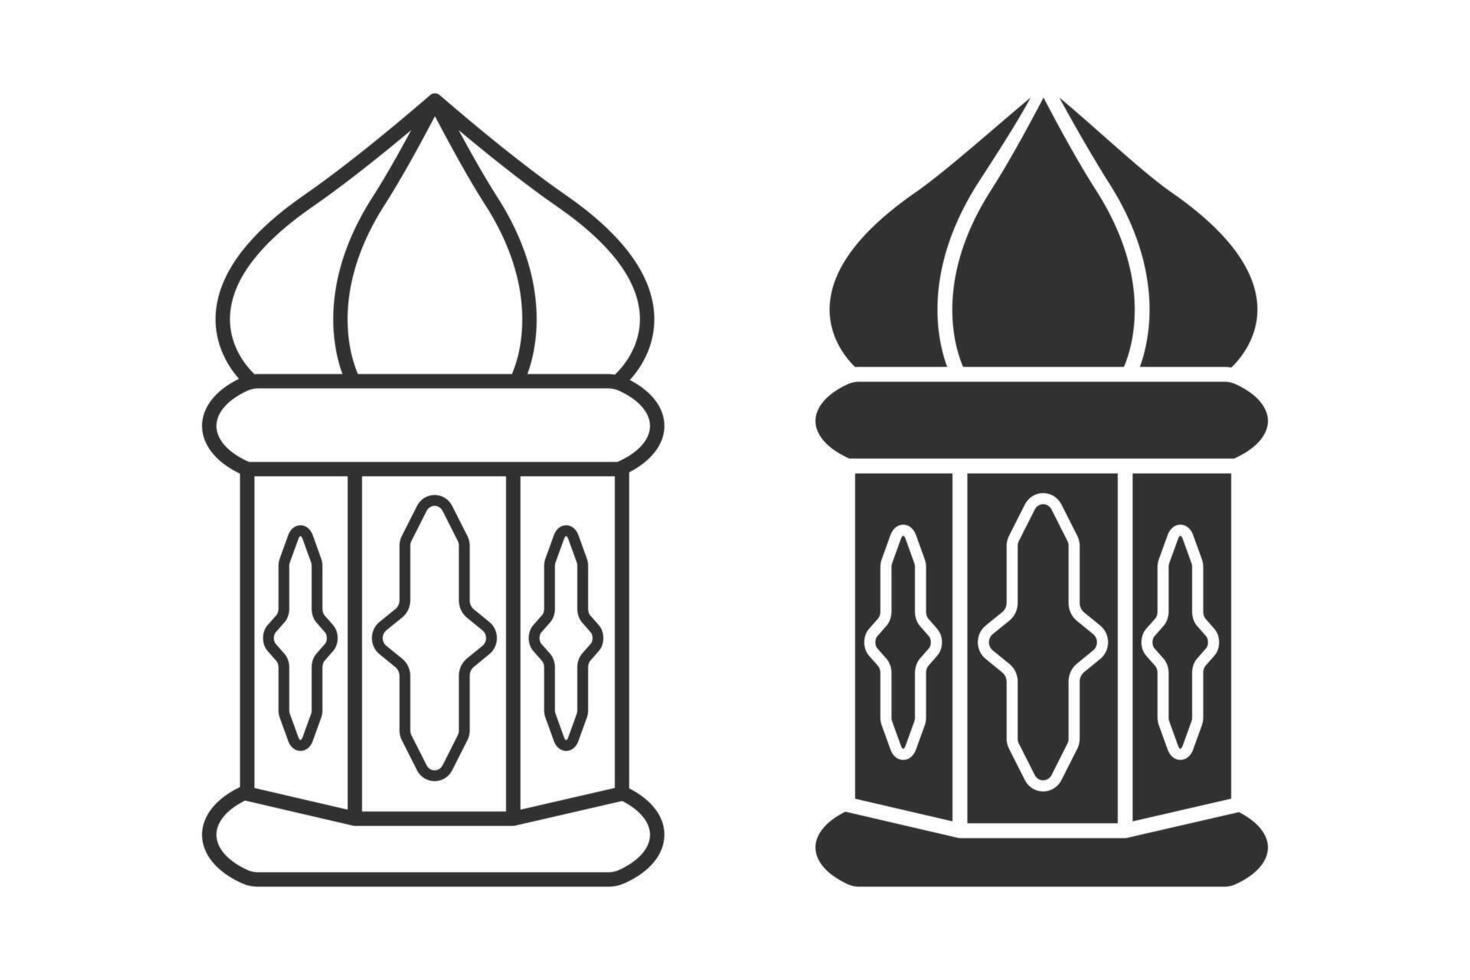 Ramadã luminária vetor - islâmico decorativo arte, islâmico decoração luminária vetor - festivo Ramadã projeto, tradicional Ramadã vetor - islâmico decoração, Ramadã luminária vetor ilustração - islâmico arte